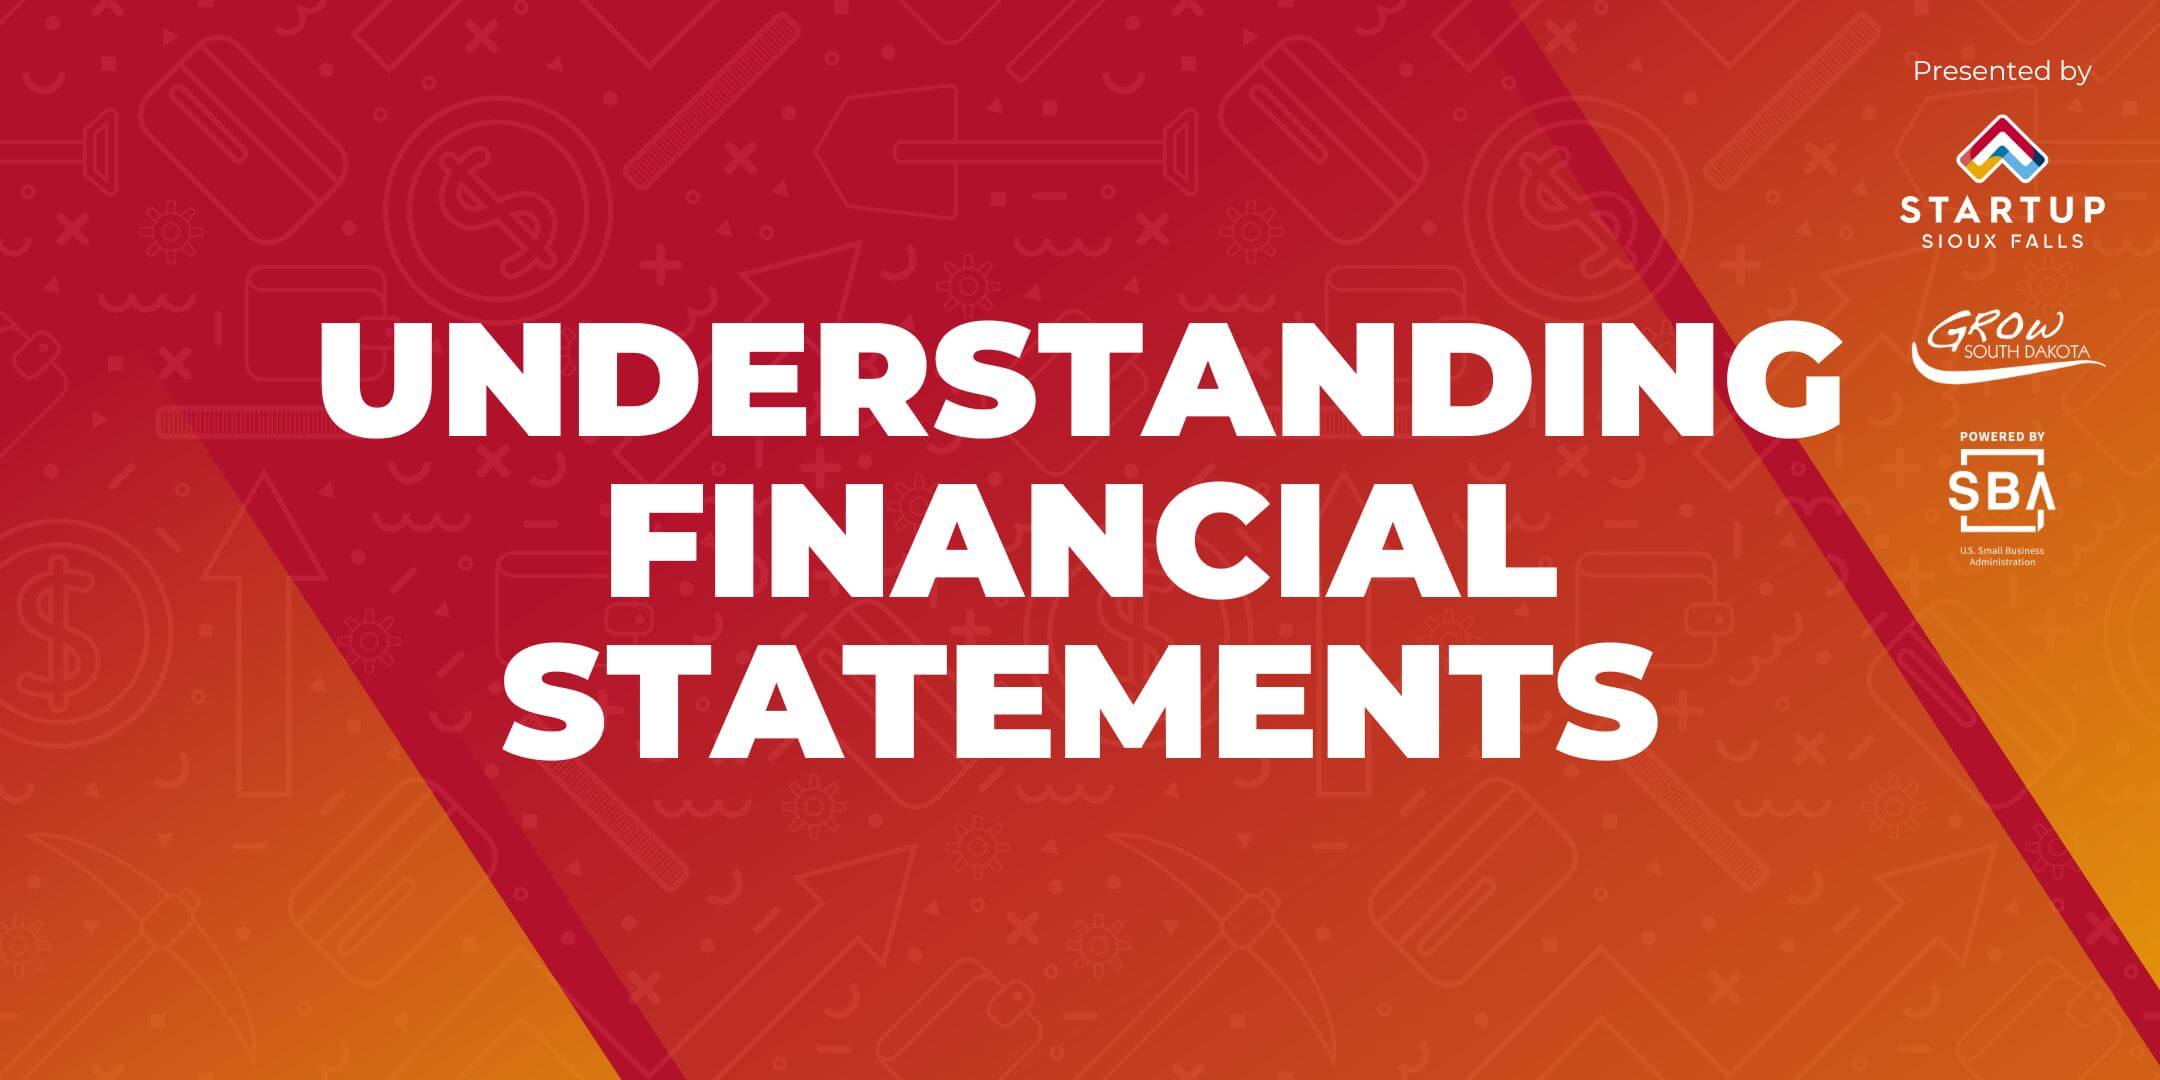 understanding financial statements